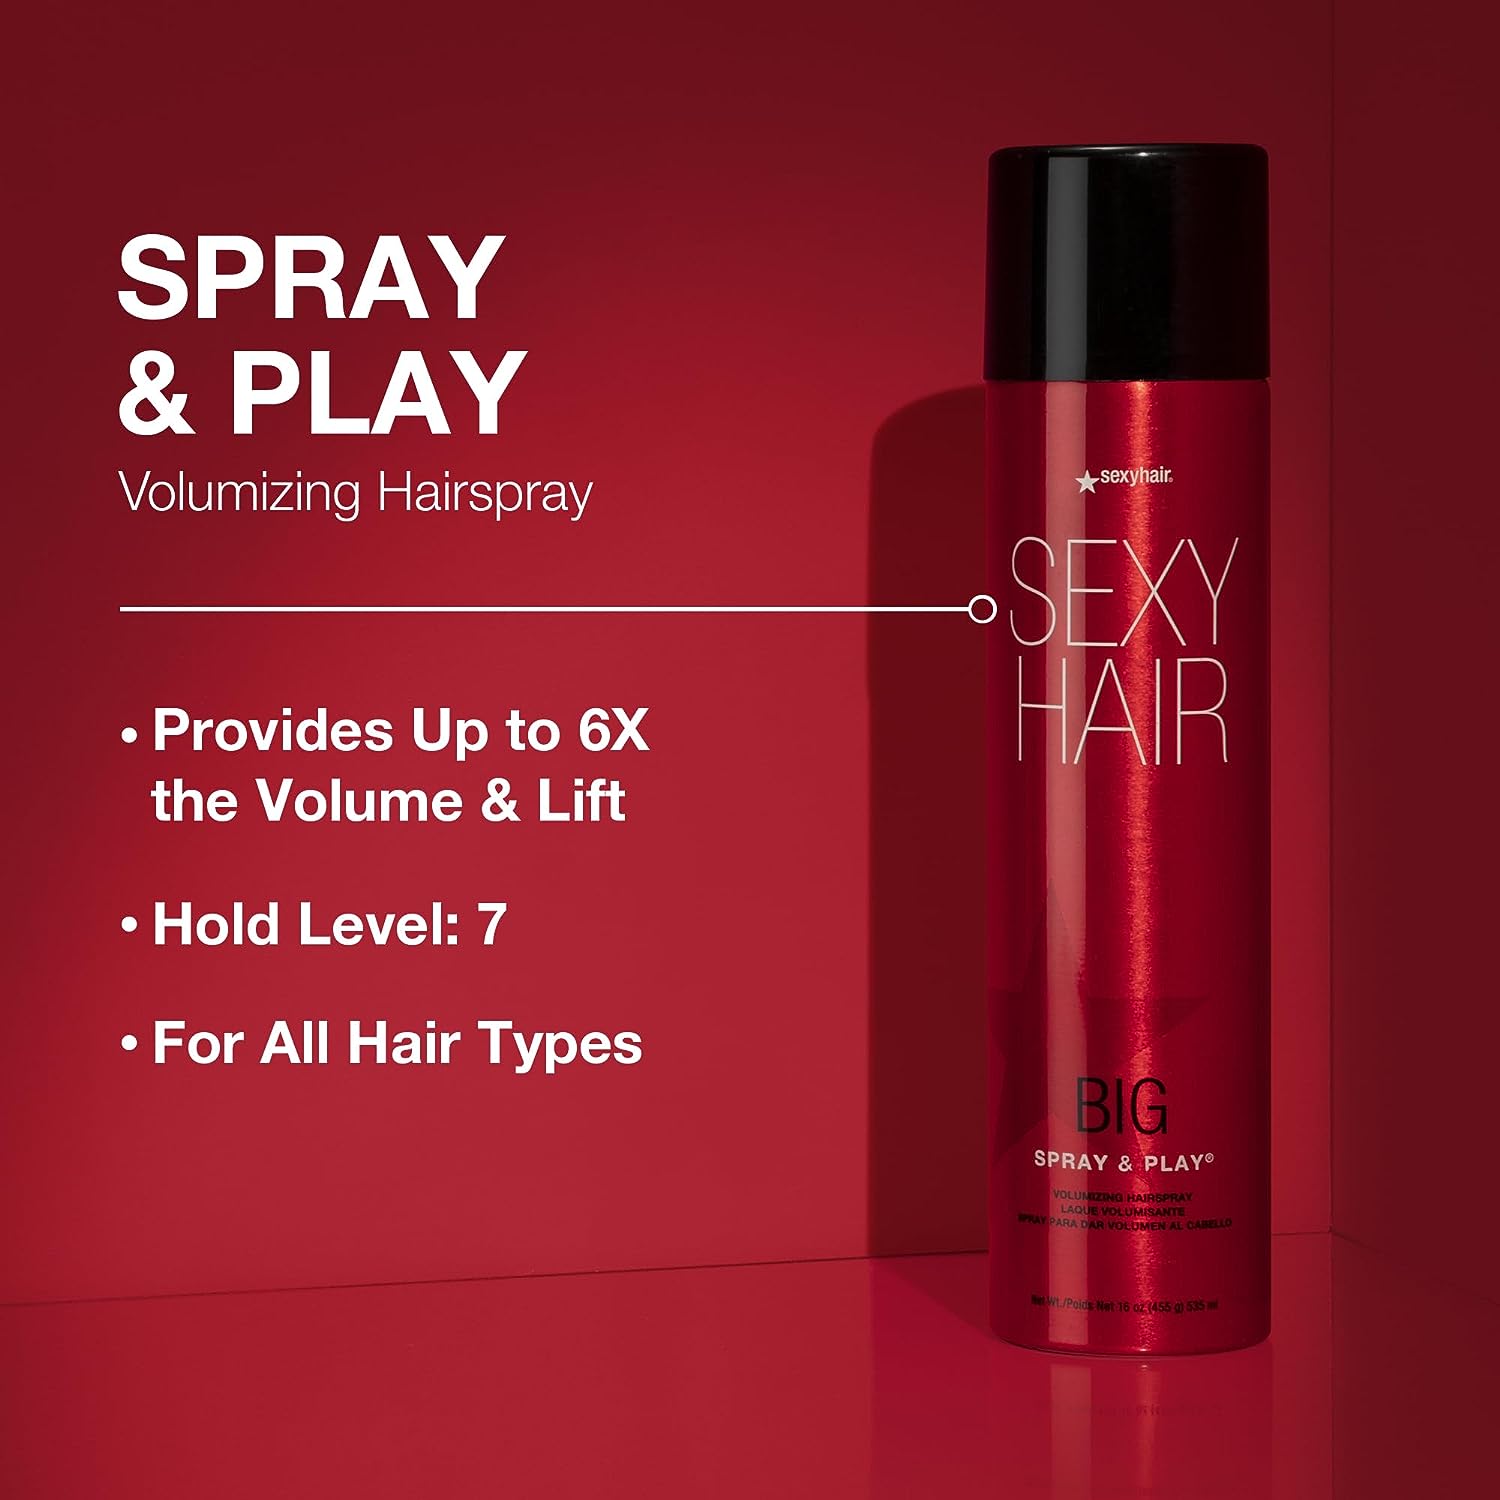 Big Sexy Hair Spray & Play Volumizing Hairspray Benefits